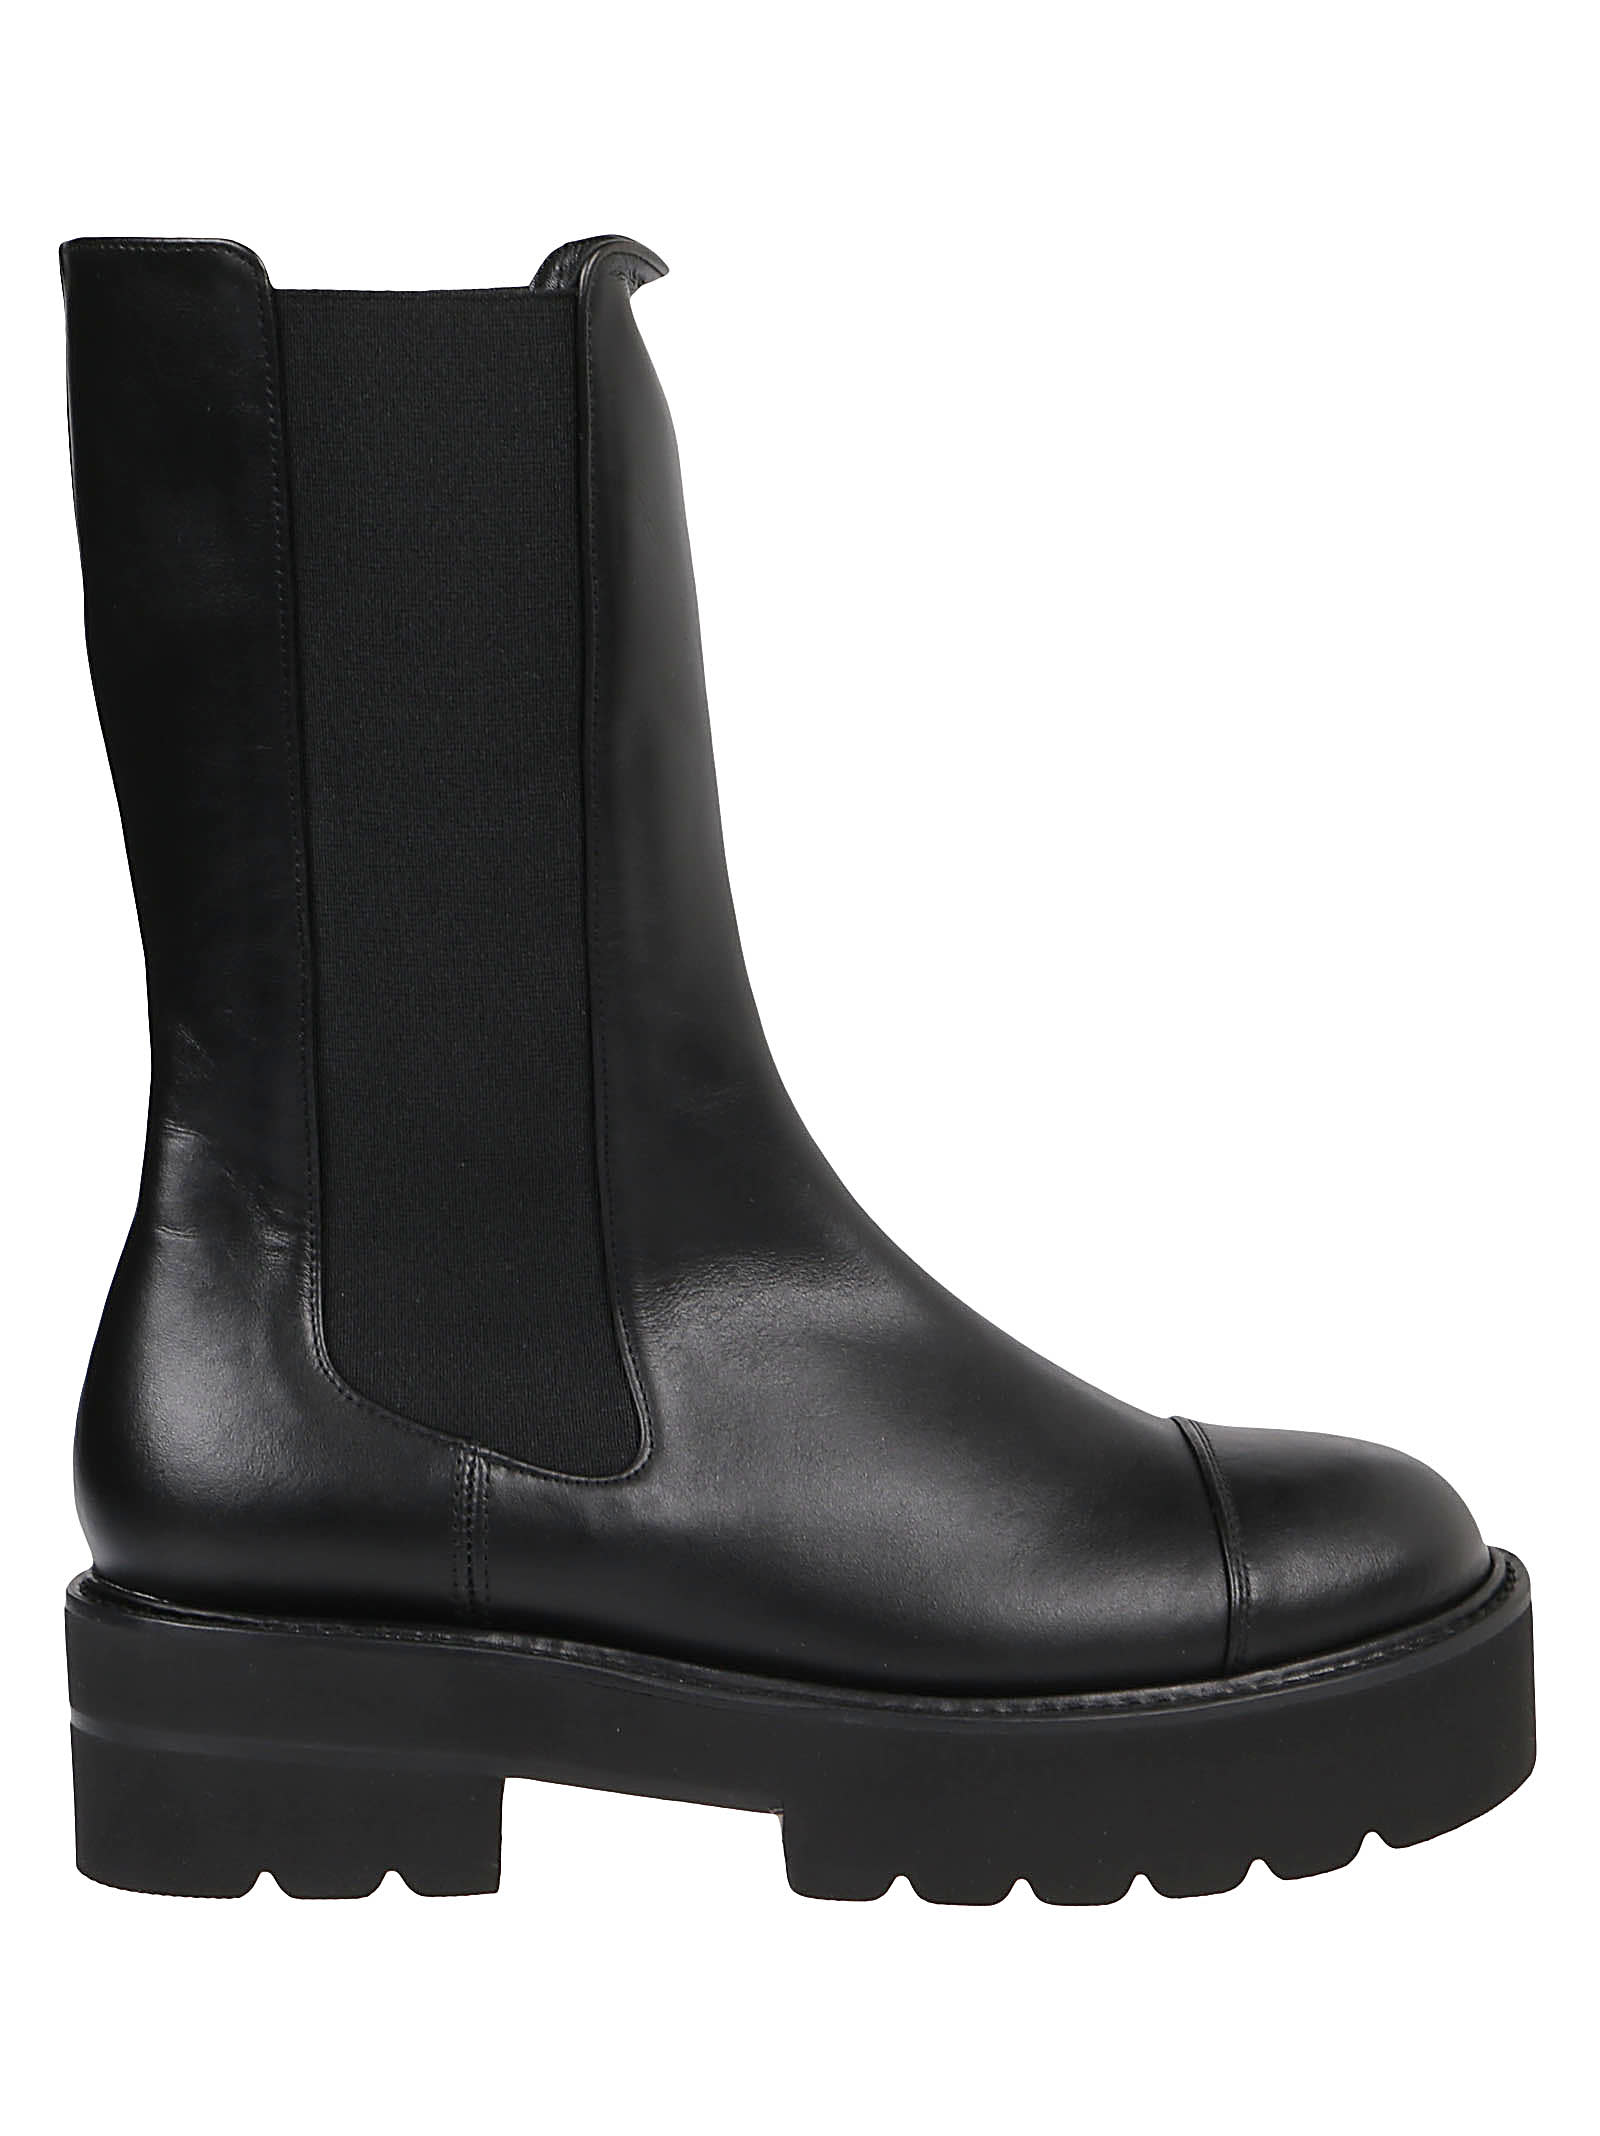 Buy Stuart Weitzman Presley Ultralift Boots online, shop Stuart Weitzman shoes with free shipping